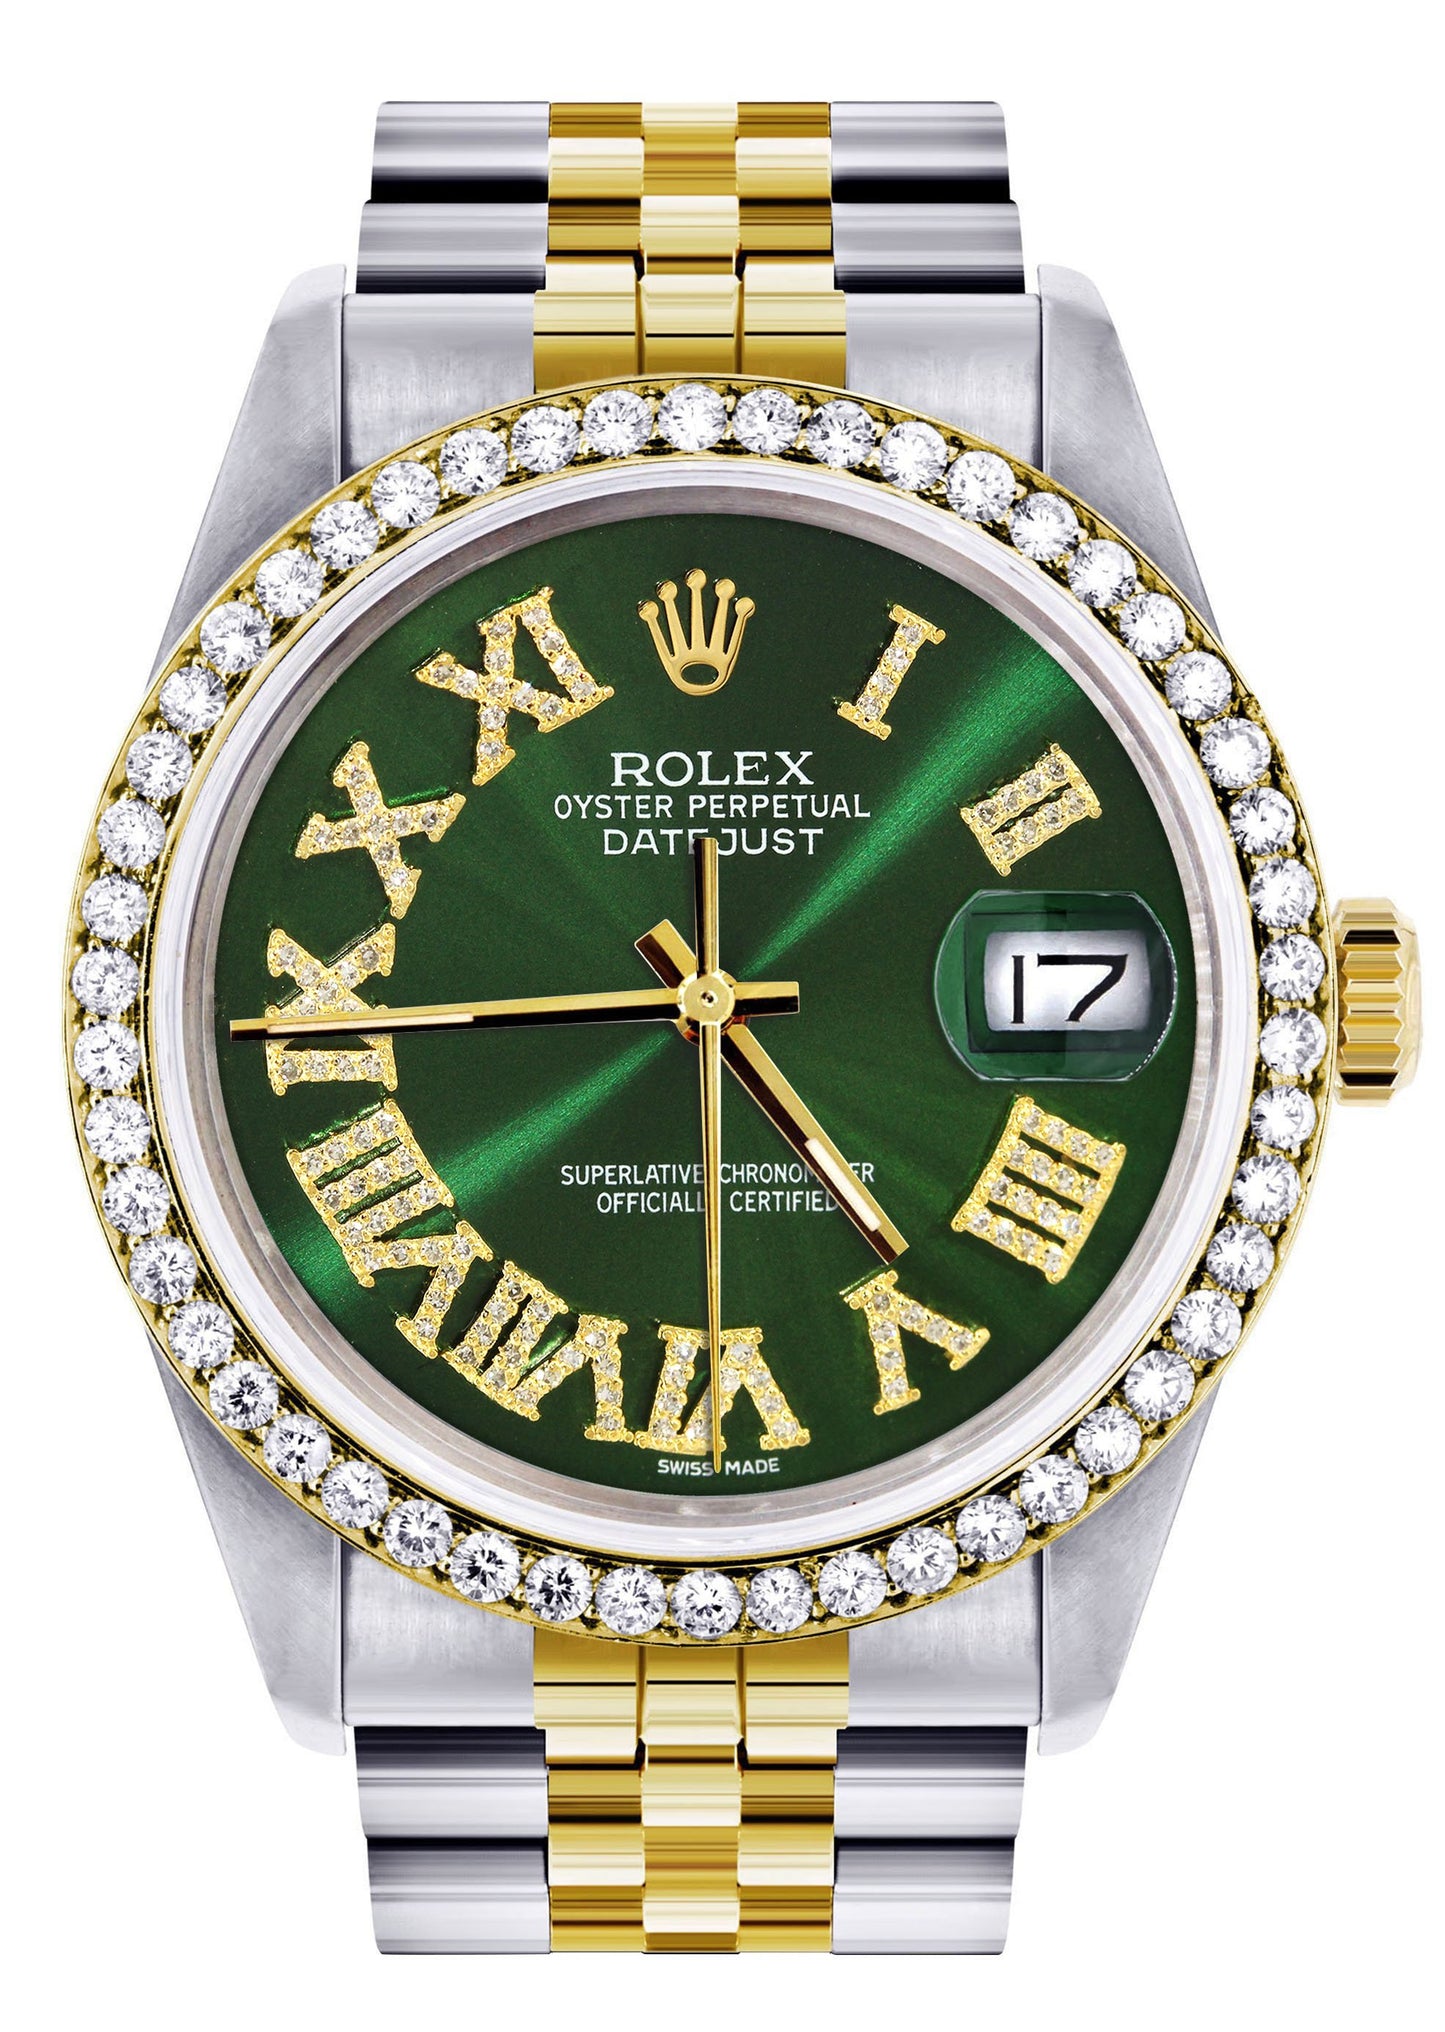 Rolex 16013 18k/Stainless steel Jubilee with diamond Bezel/Fluted